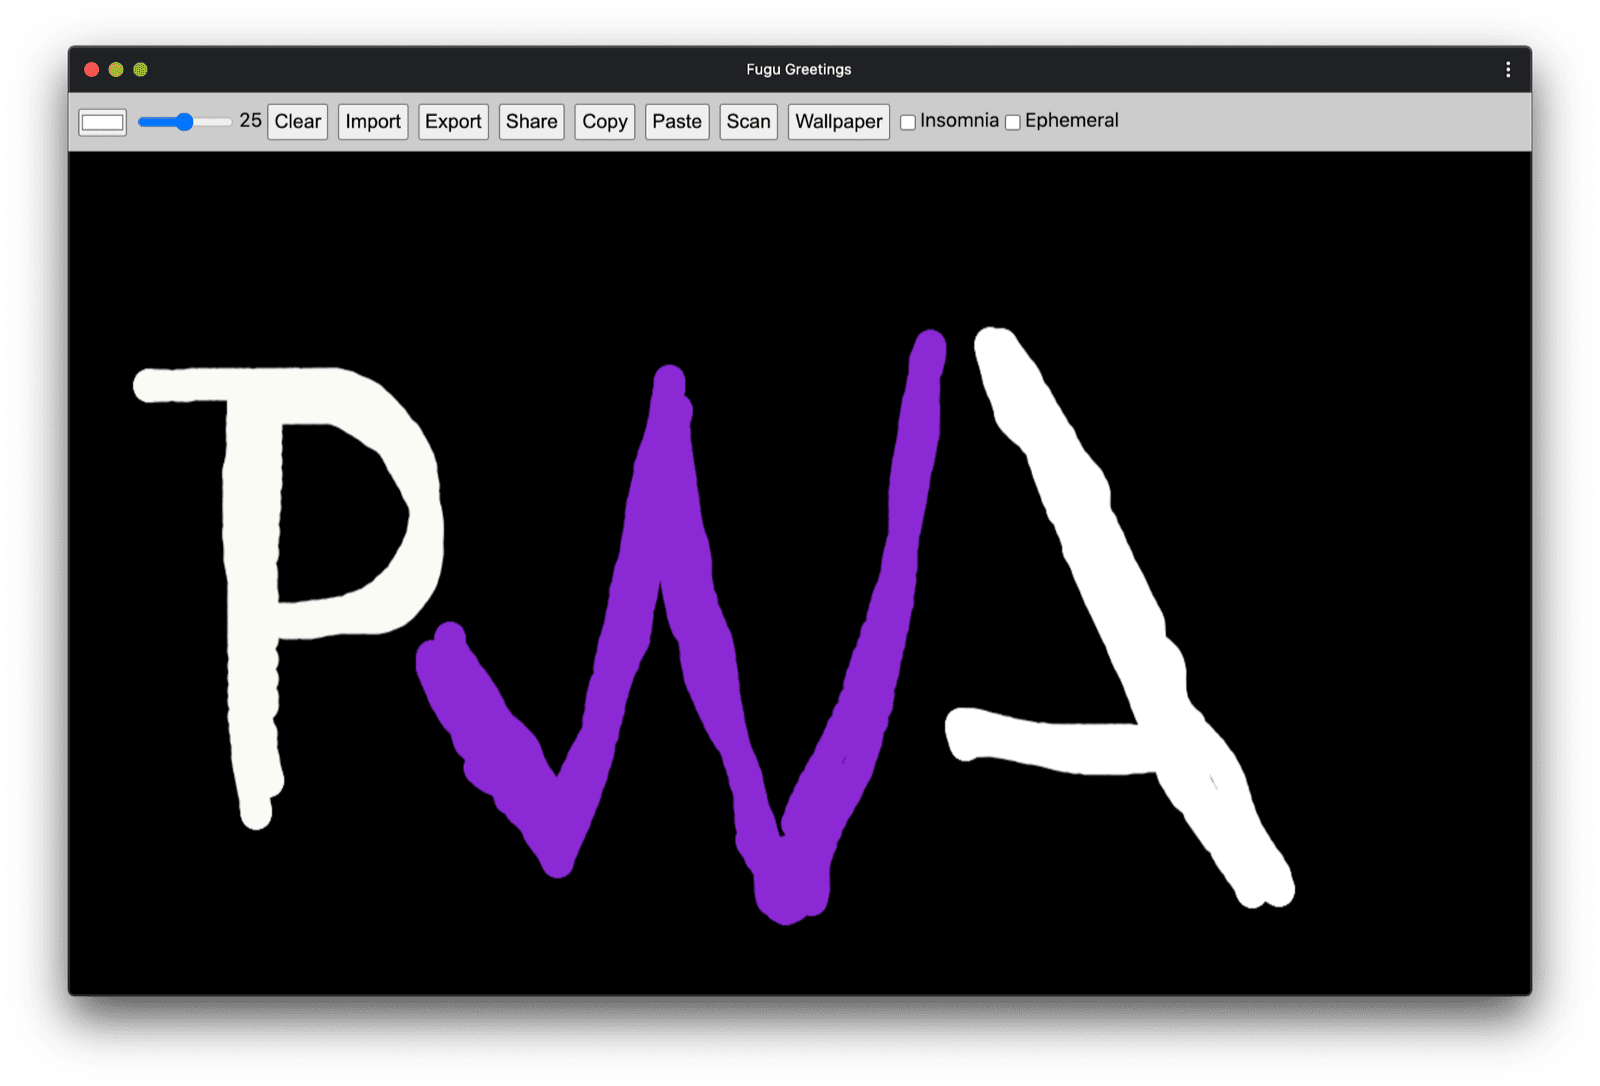 PWA Fugu Greetings con un dibujo que se asemeja al logo de la comunidad de PWA.